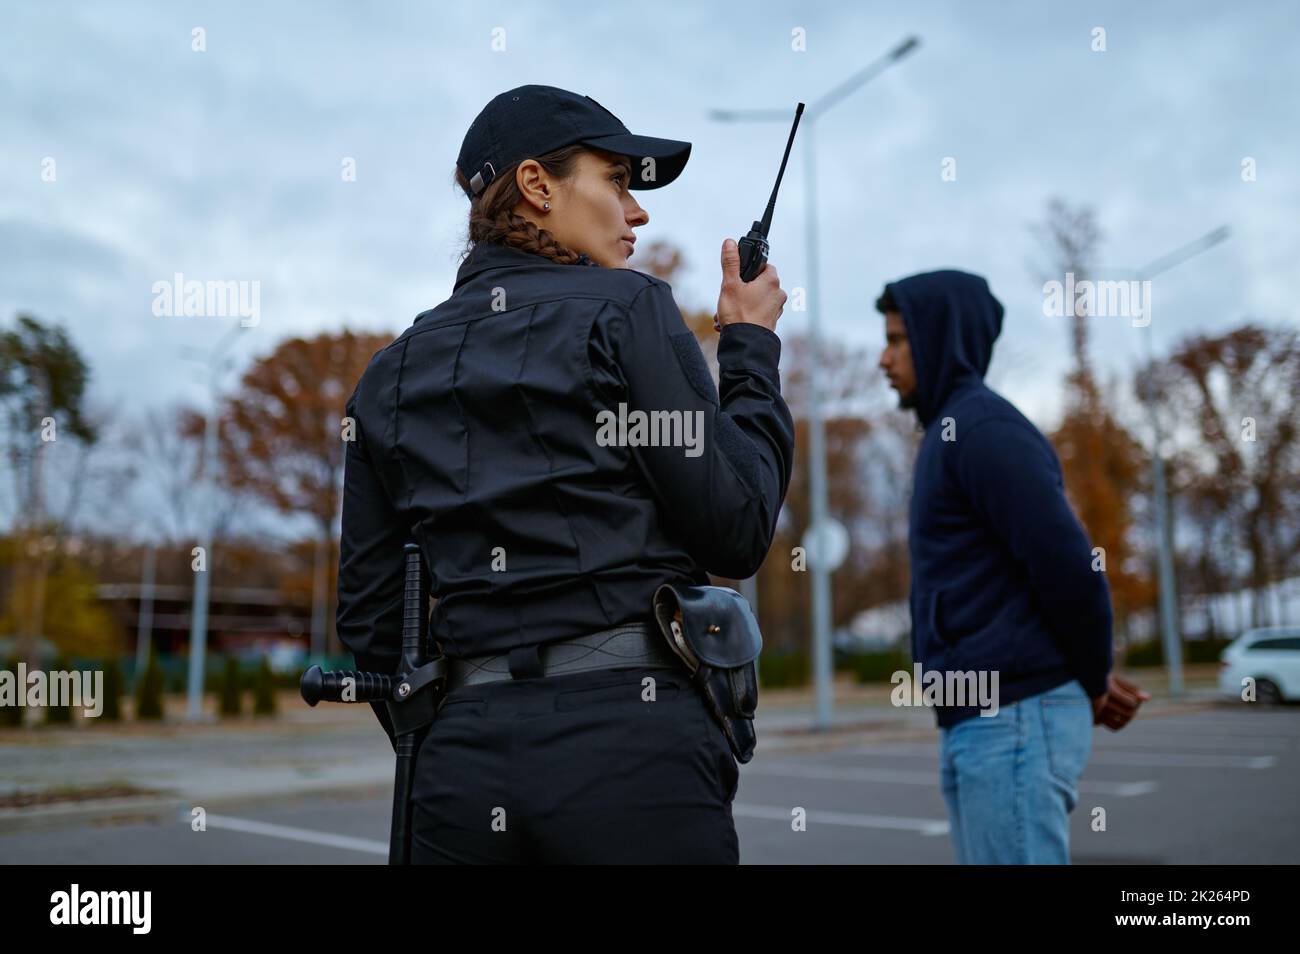 Woman cop using portable radio back view Stock Photo